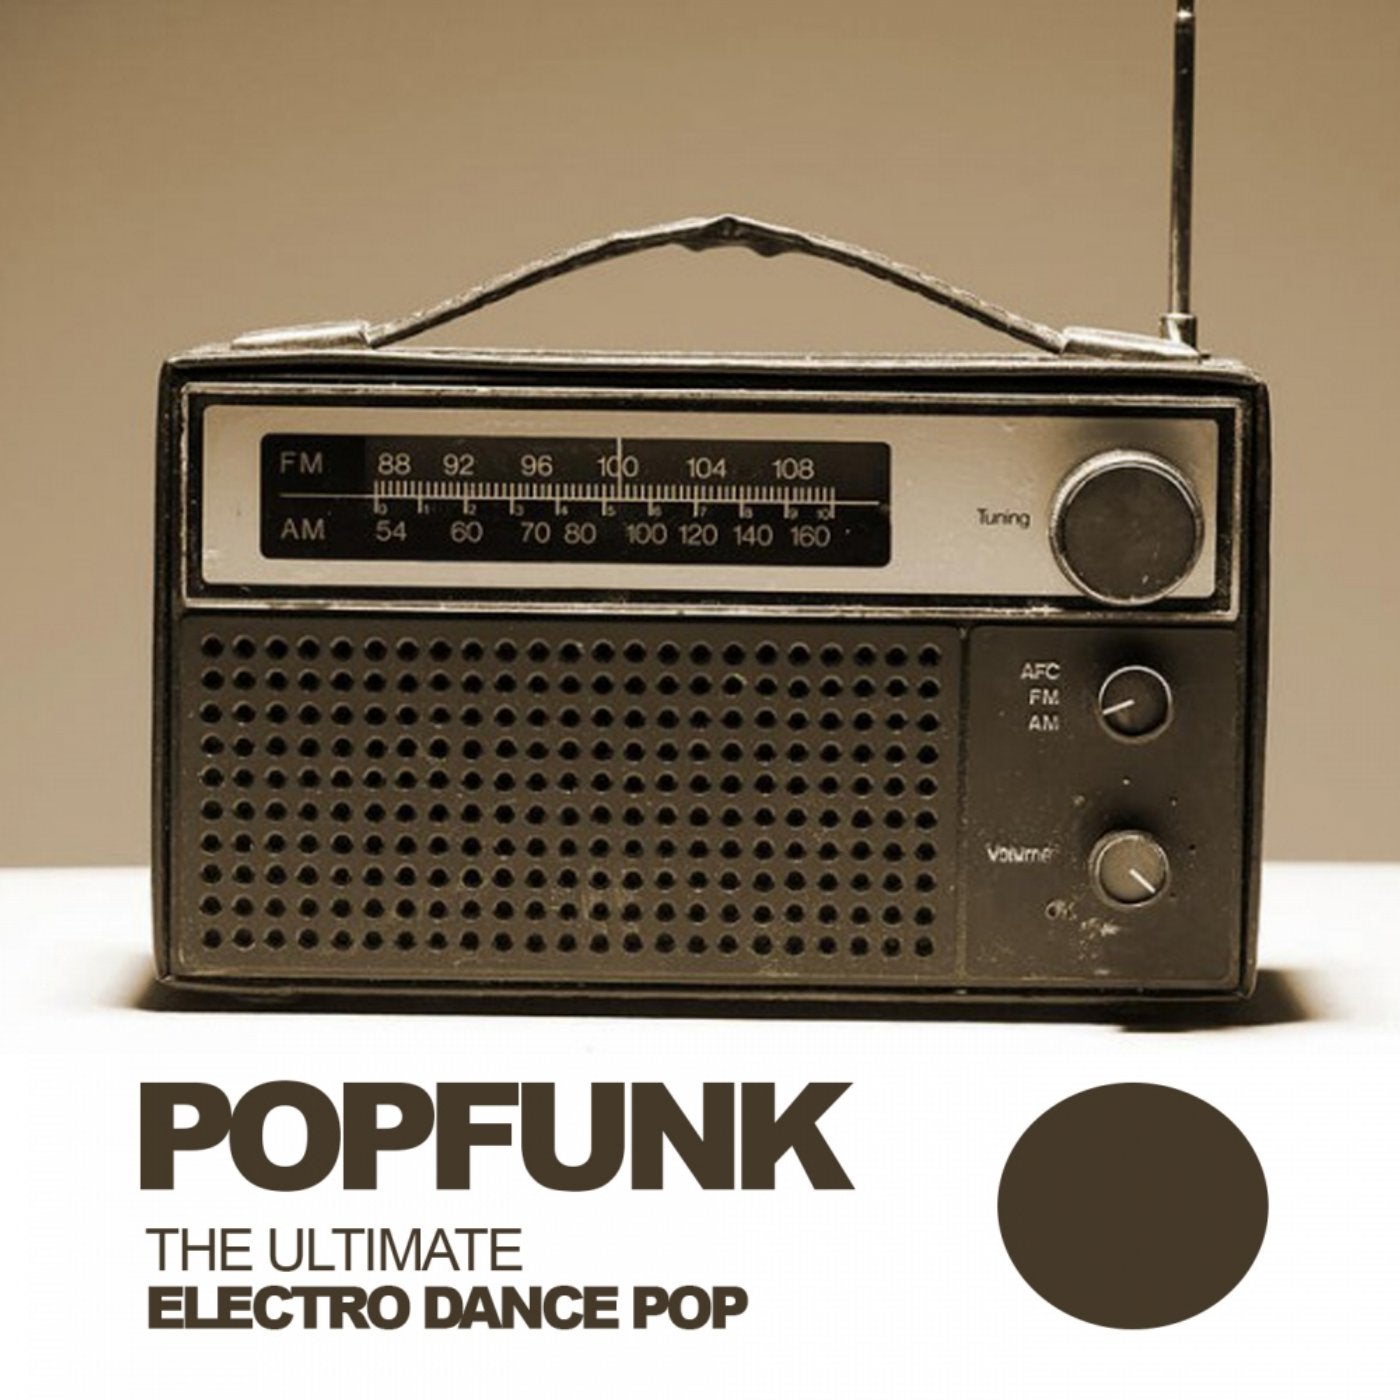 Popfunk: The Ultimate Electro Dance Pop